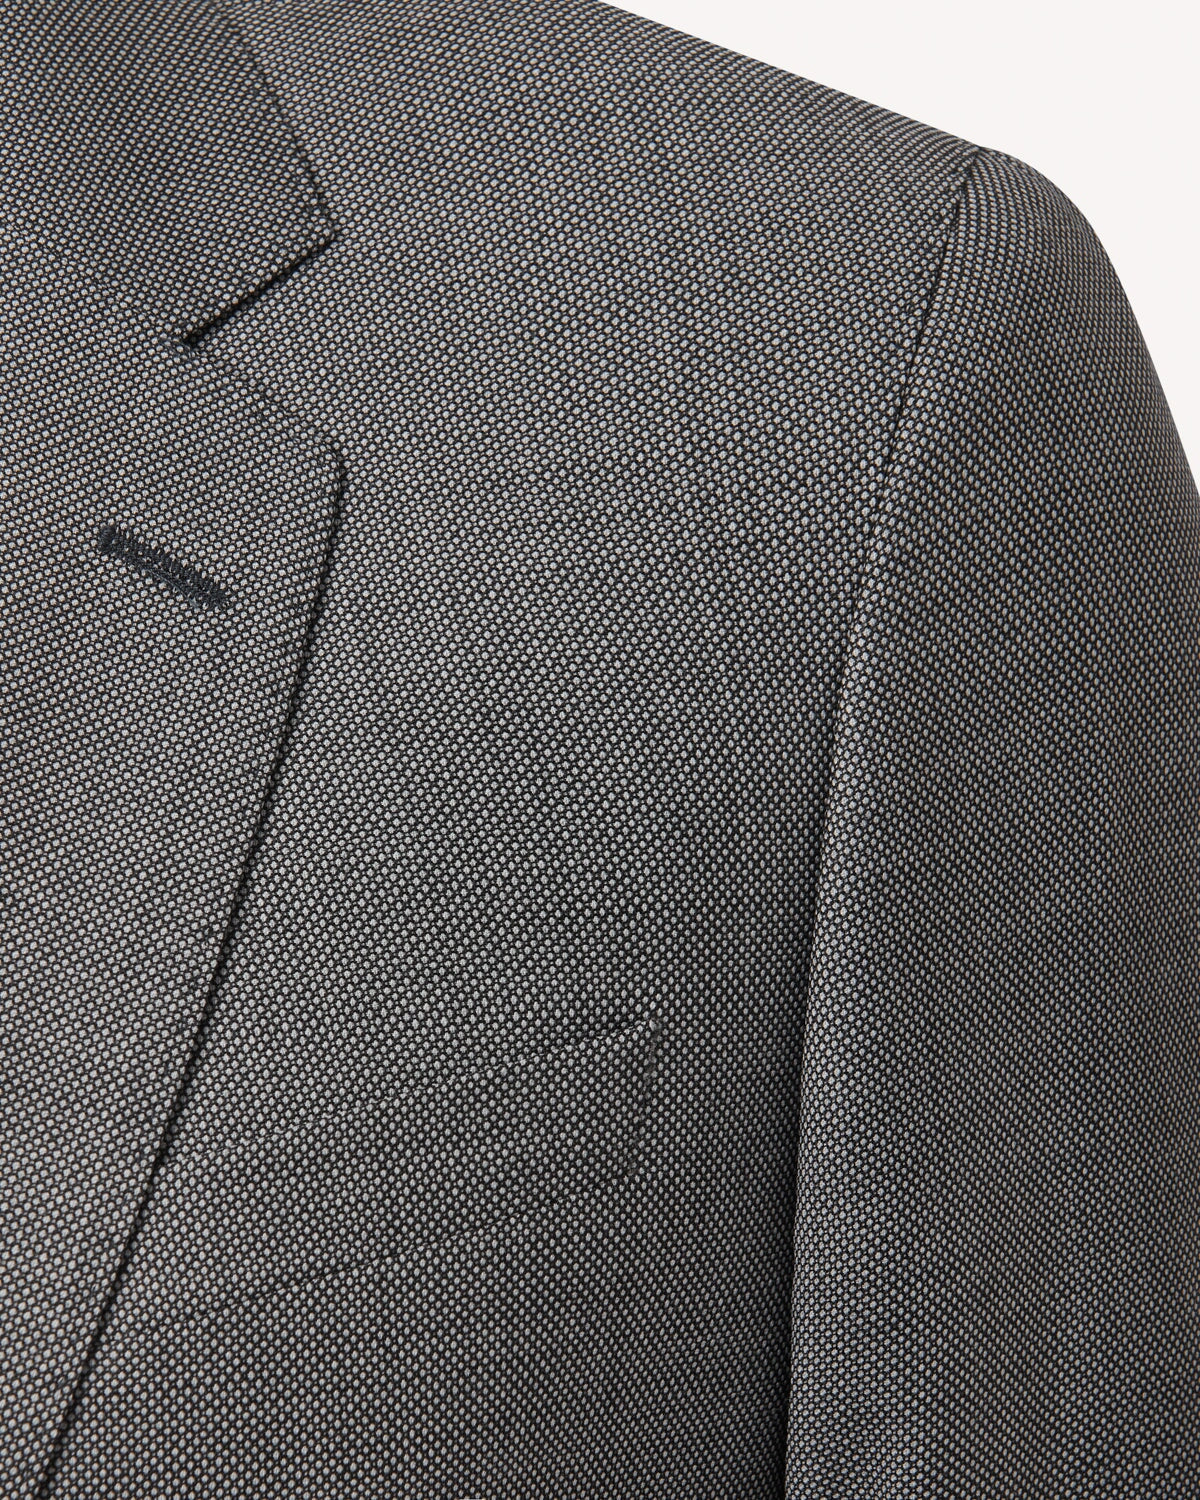 Kilgour Savile Row Tailoring SB1 KG Single Breasted Grey Birdseye Suit